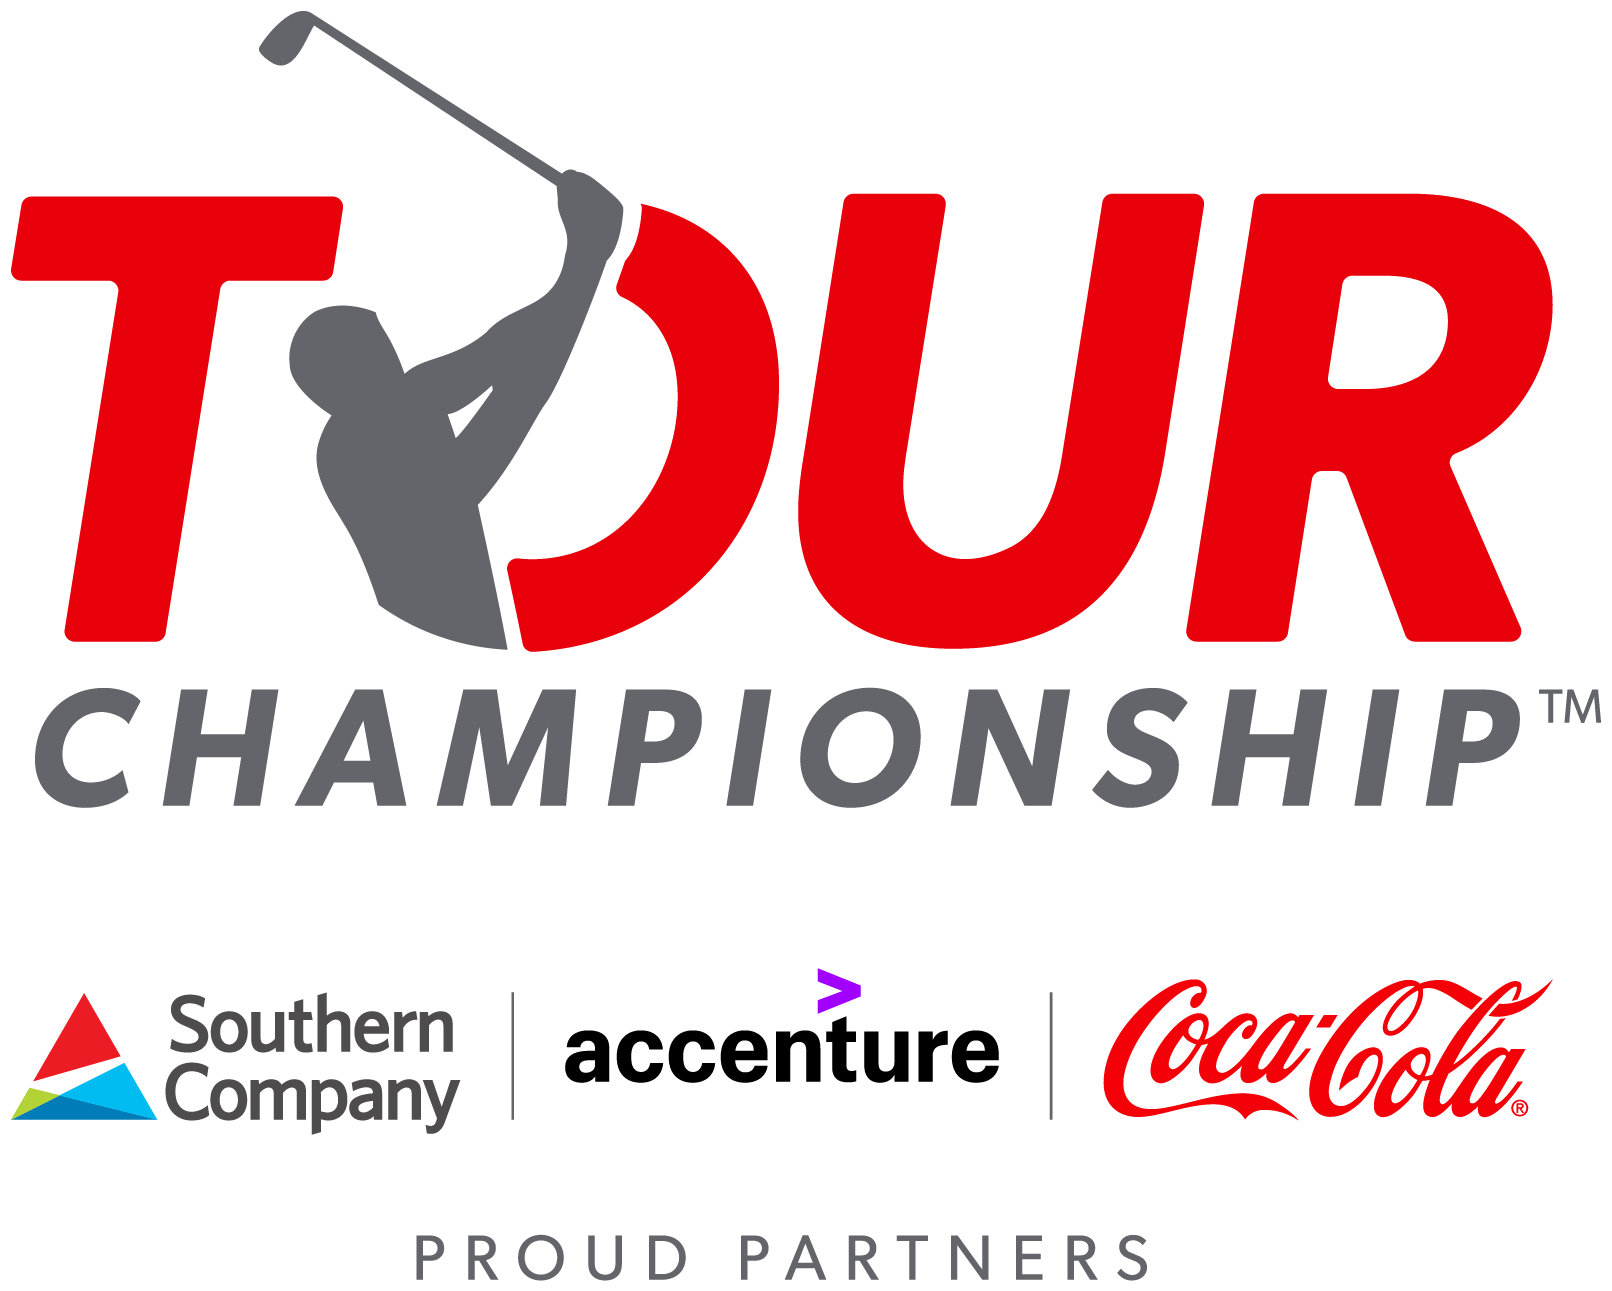 tour championship ultra club